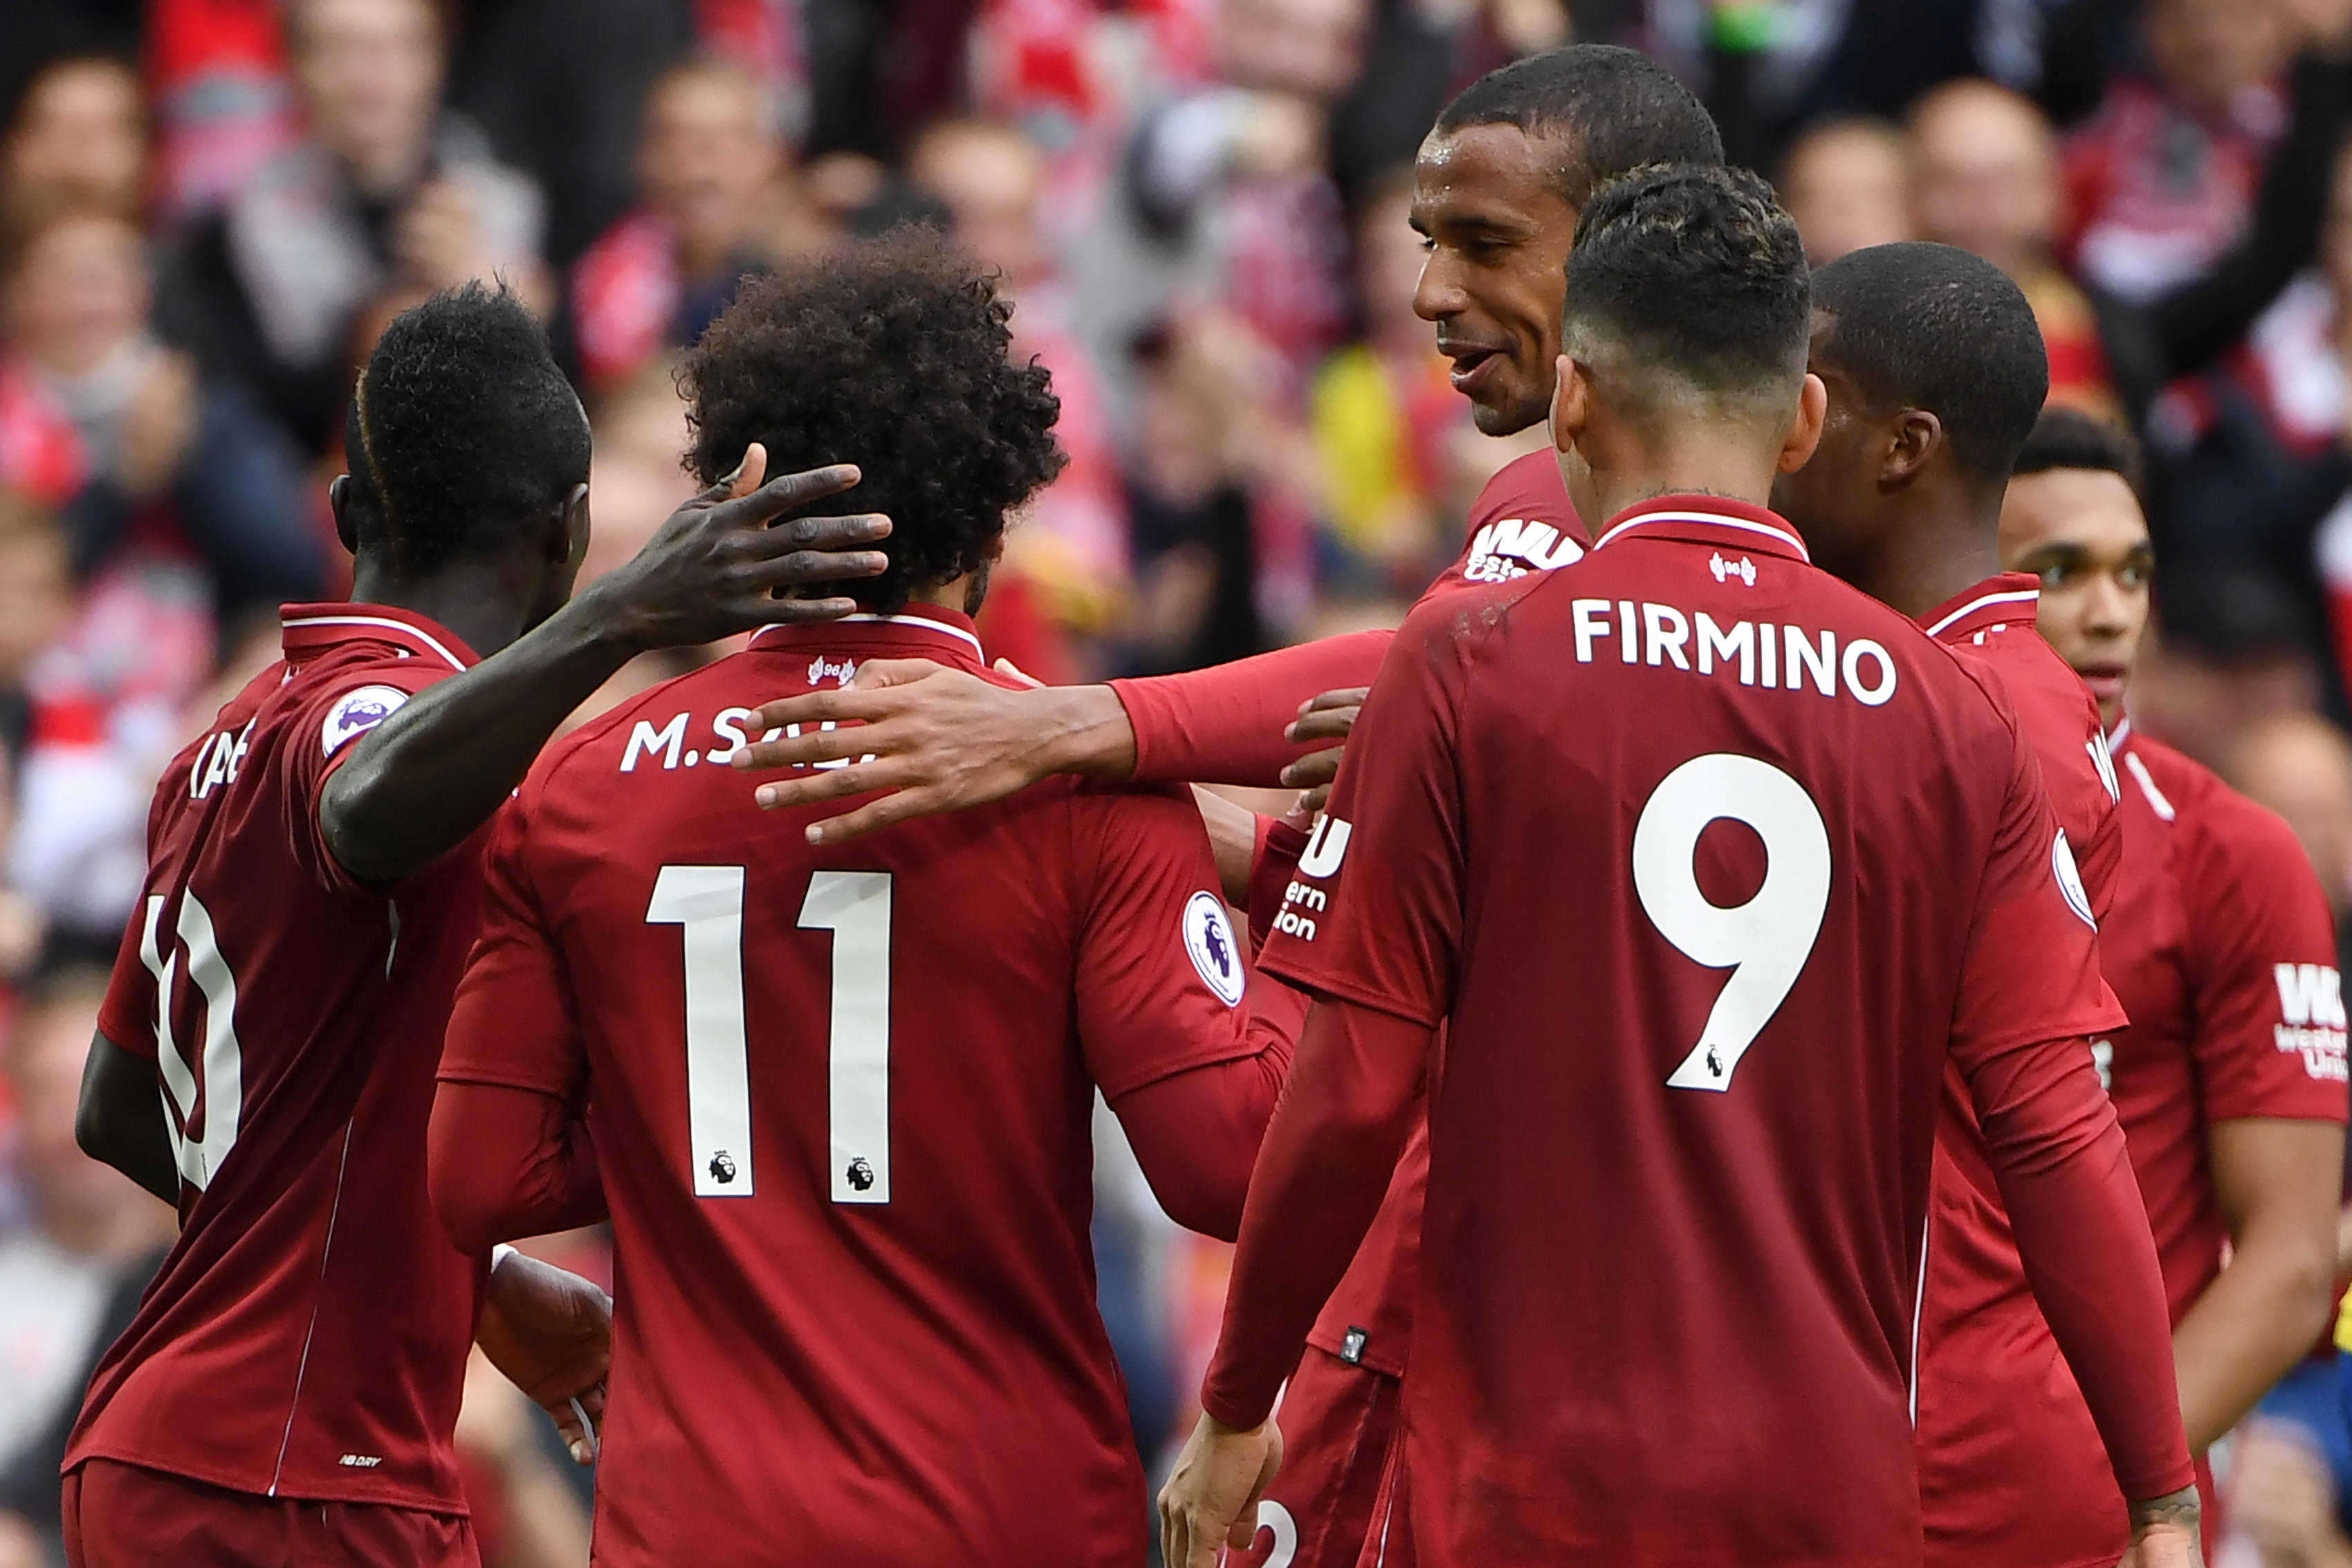 Liverpool Southampton Premier League 2018/19 Matchday 6